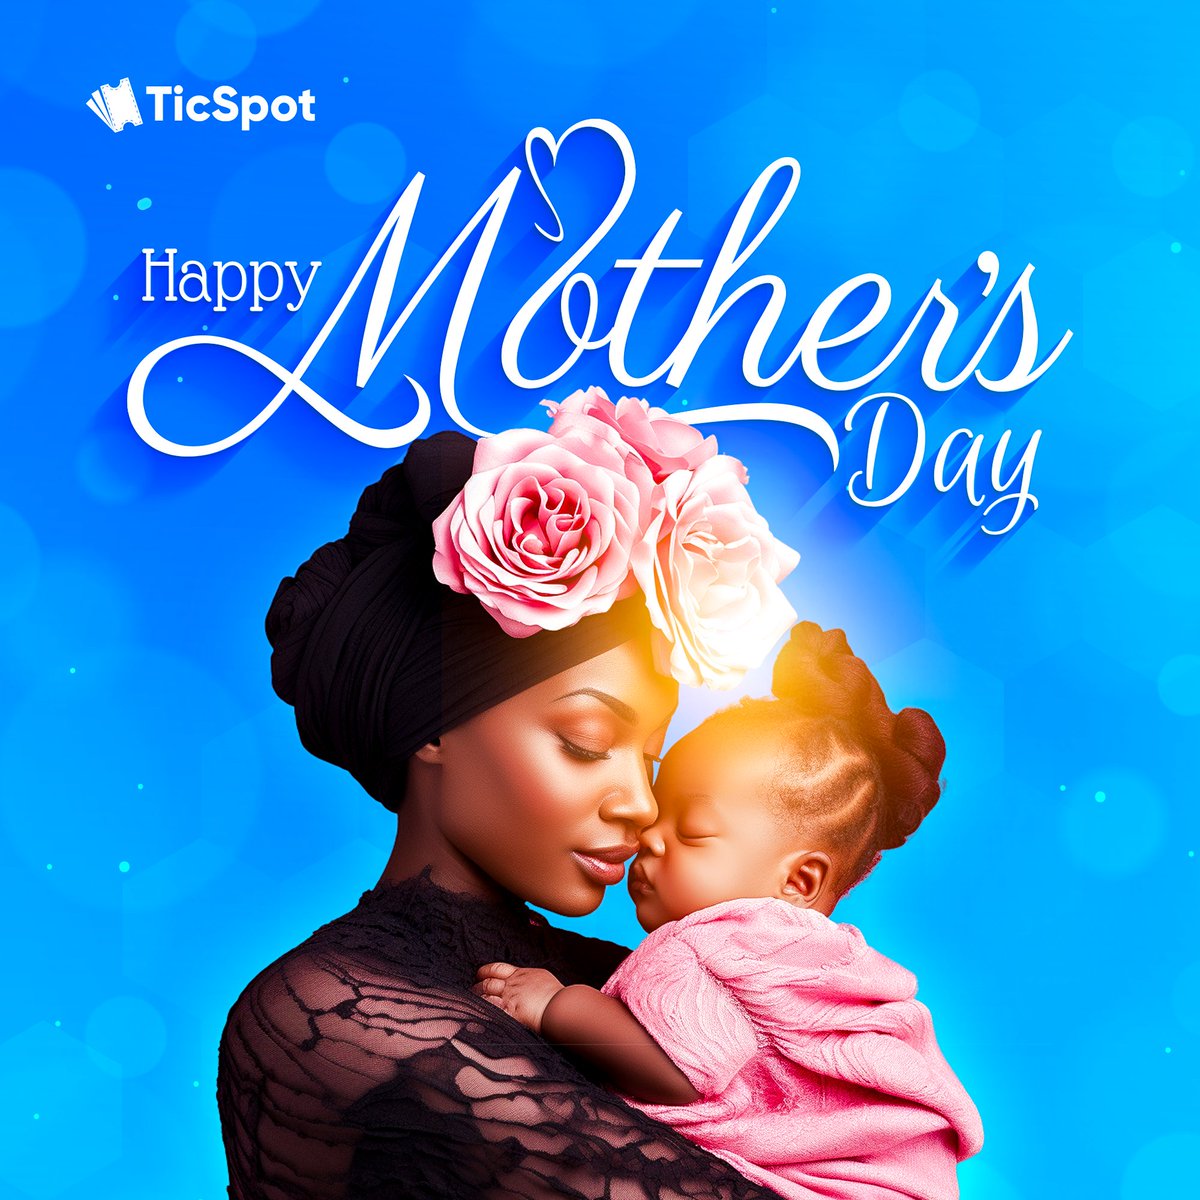 Happy Mother's Day! Celebrating the endless love and strength of moms everywhere. 💐 #MothersDayUG #UgandaMoms #LoveKampala #PearlOfAfrica #TicSpot